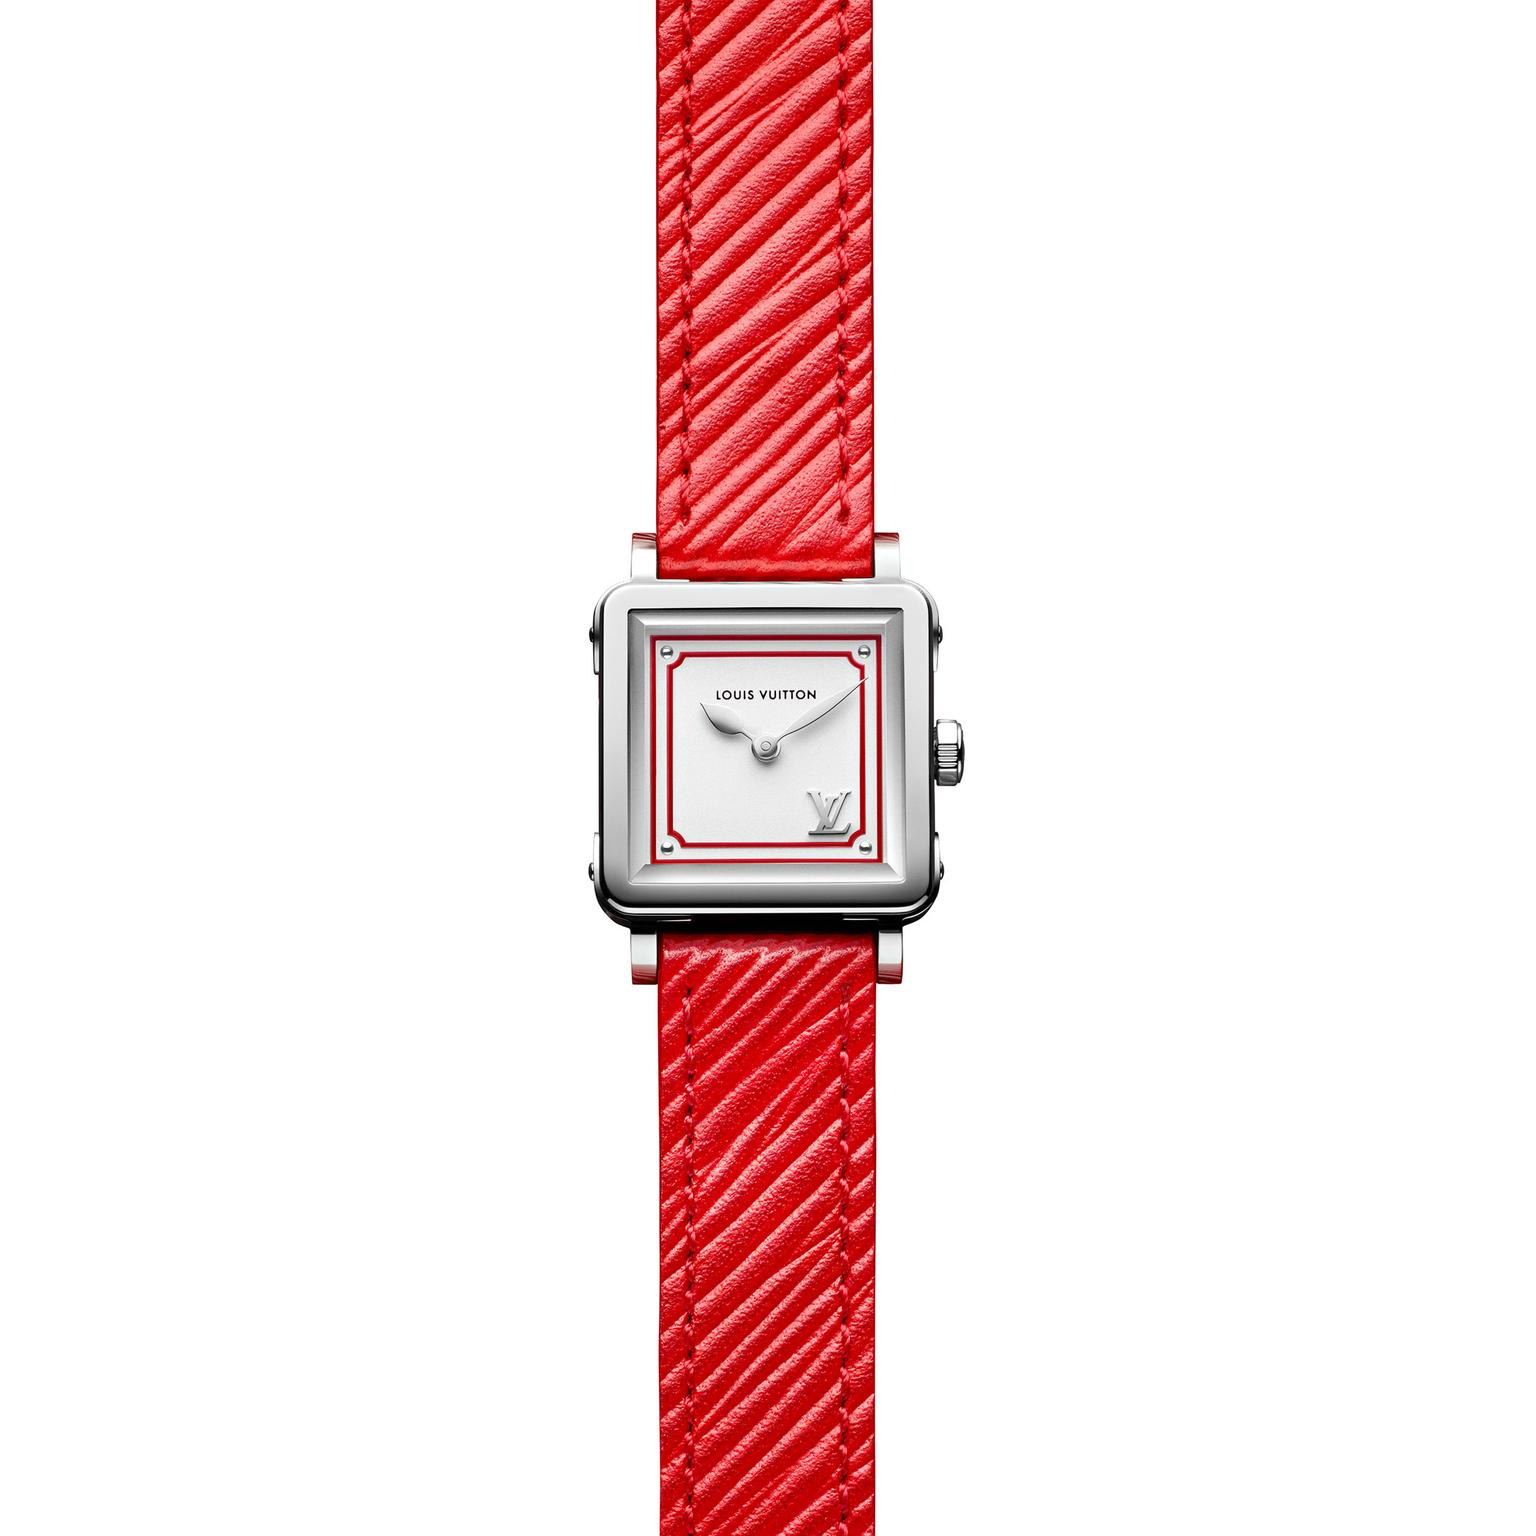 14  Louis Vuitton Watches ideas  louis vuitton watches louis vuitton  vuitton